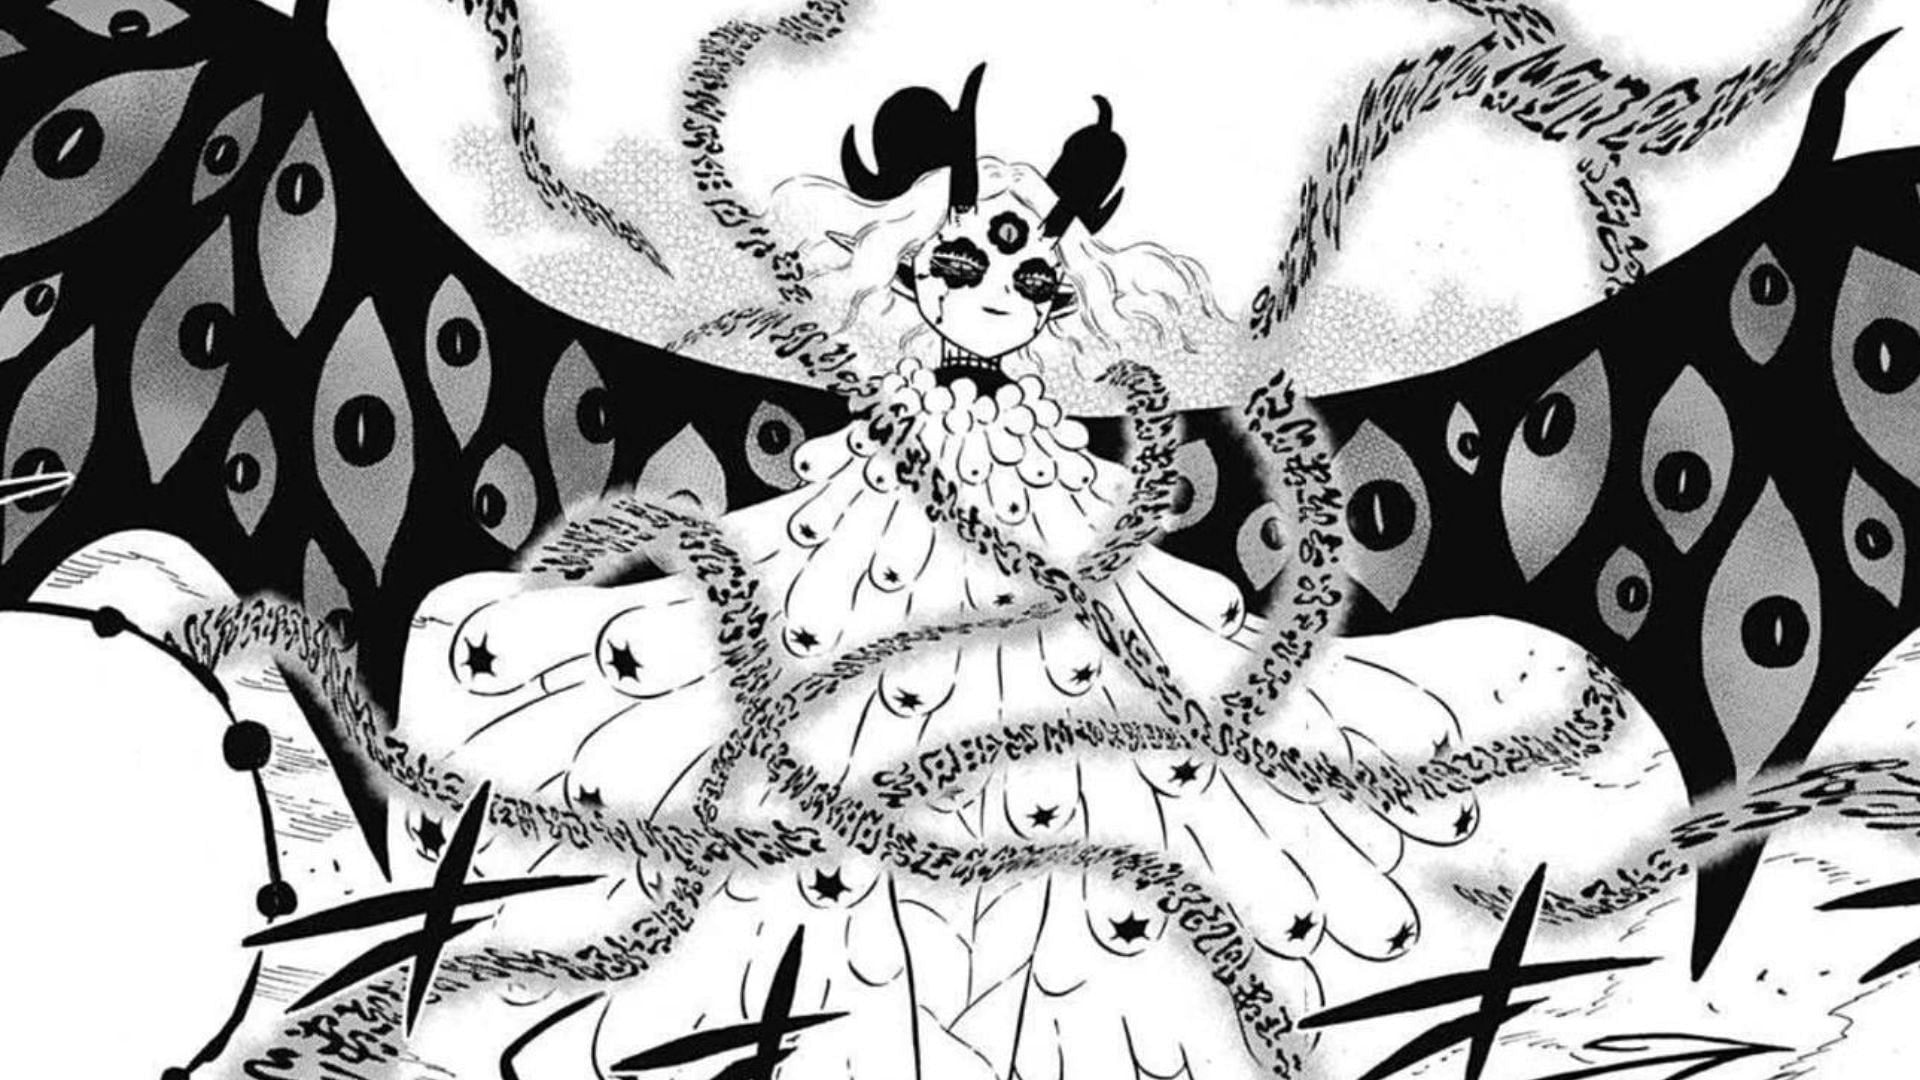 Megicula as seen in the Black Clover manga (Image via Shueisha)